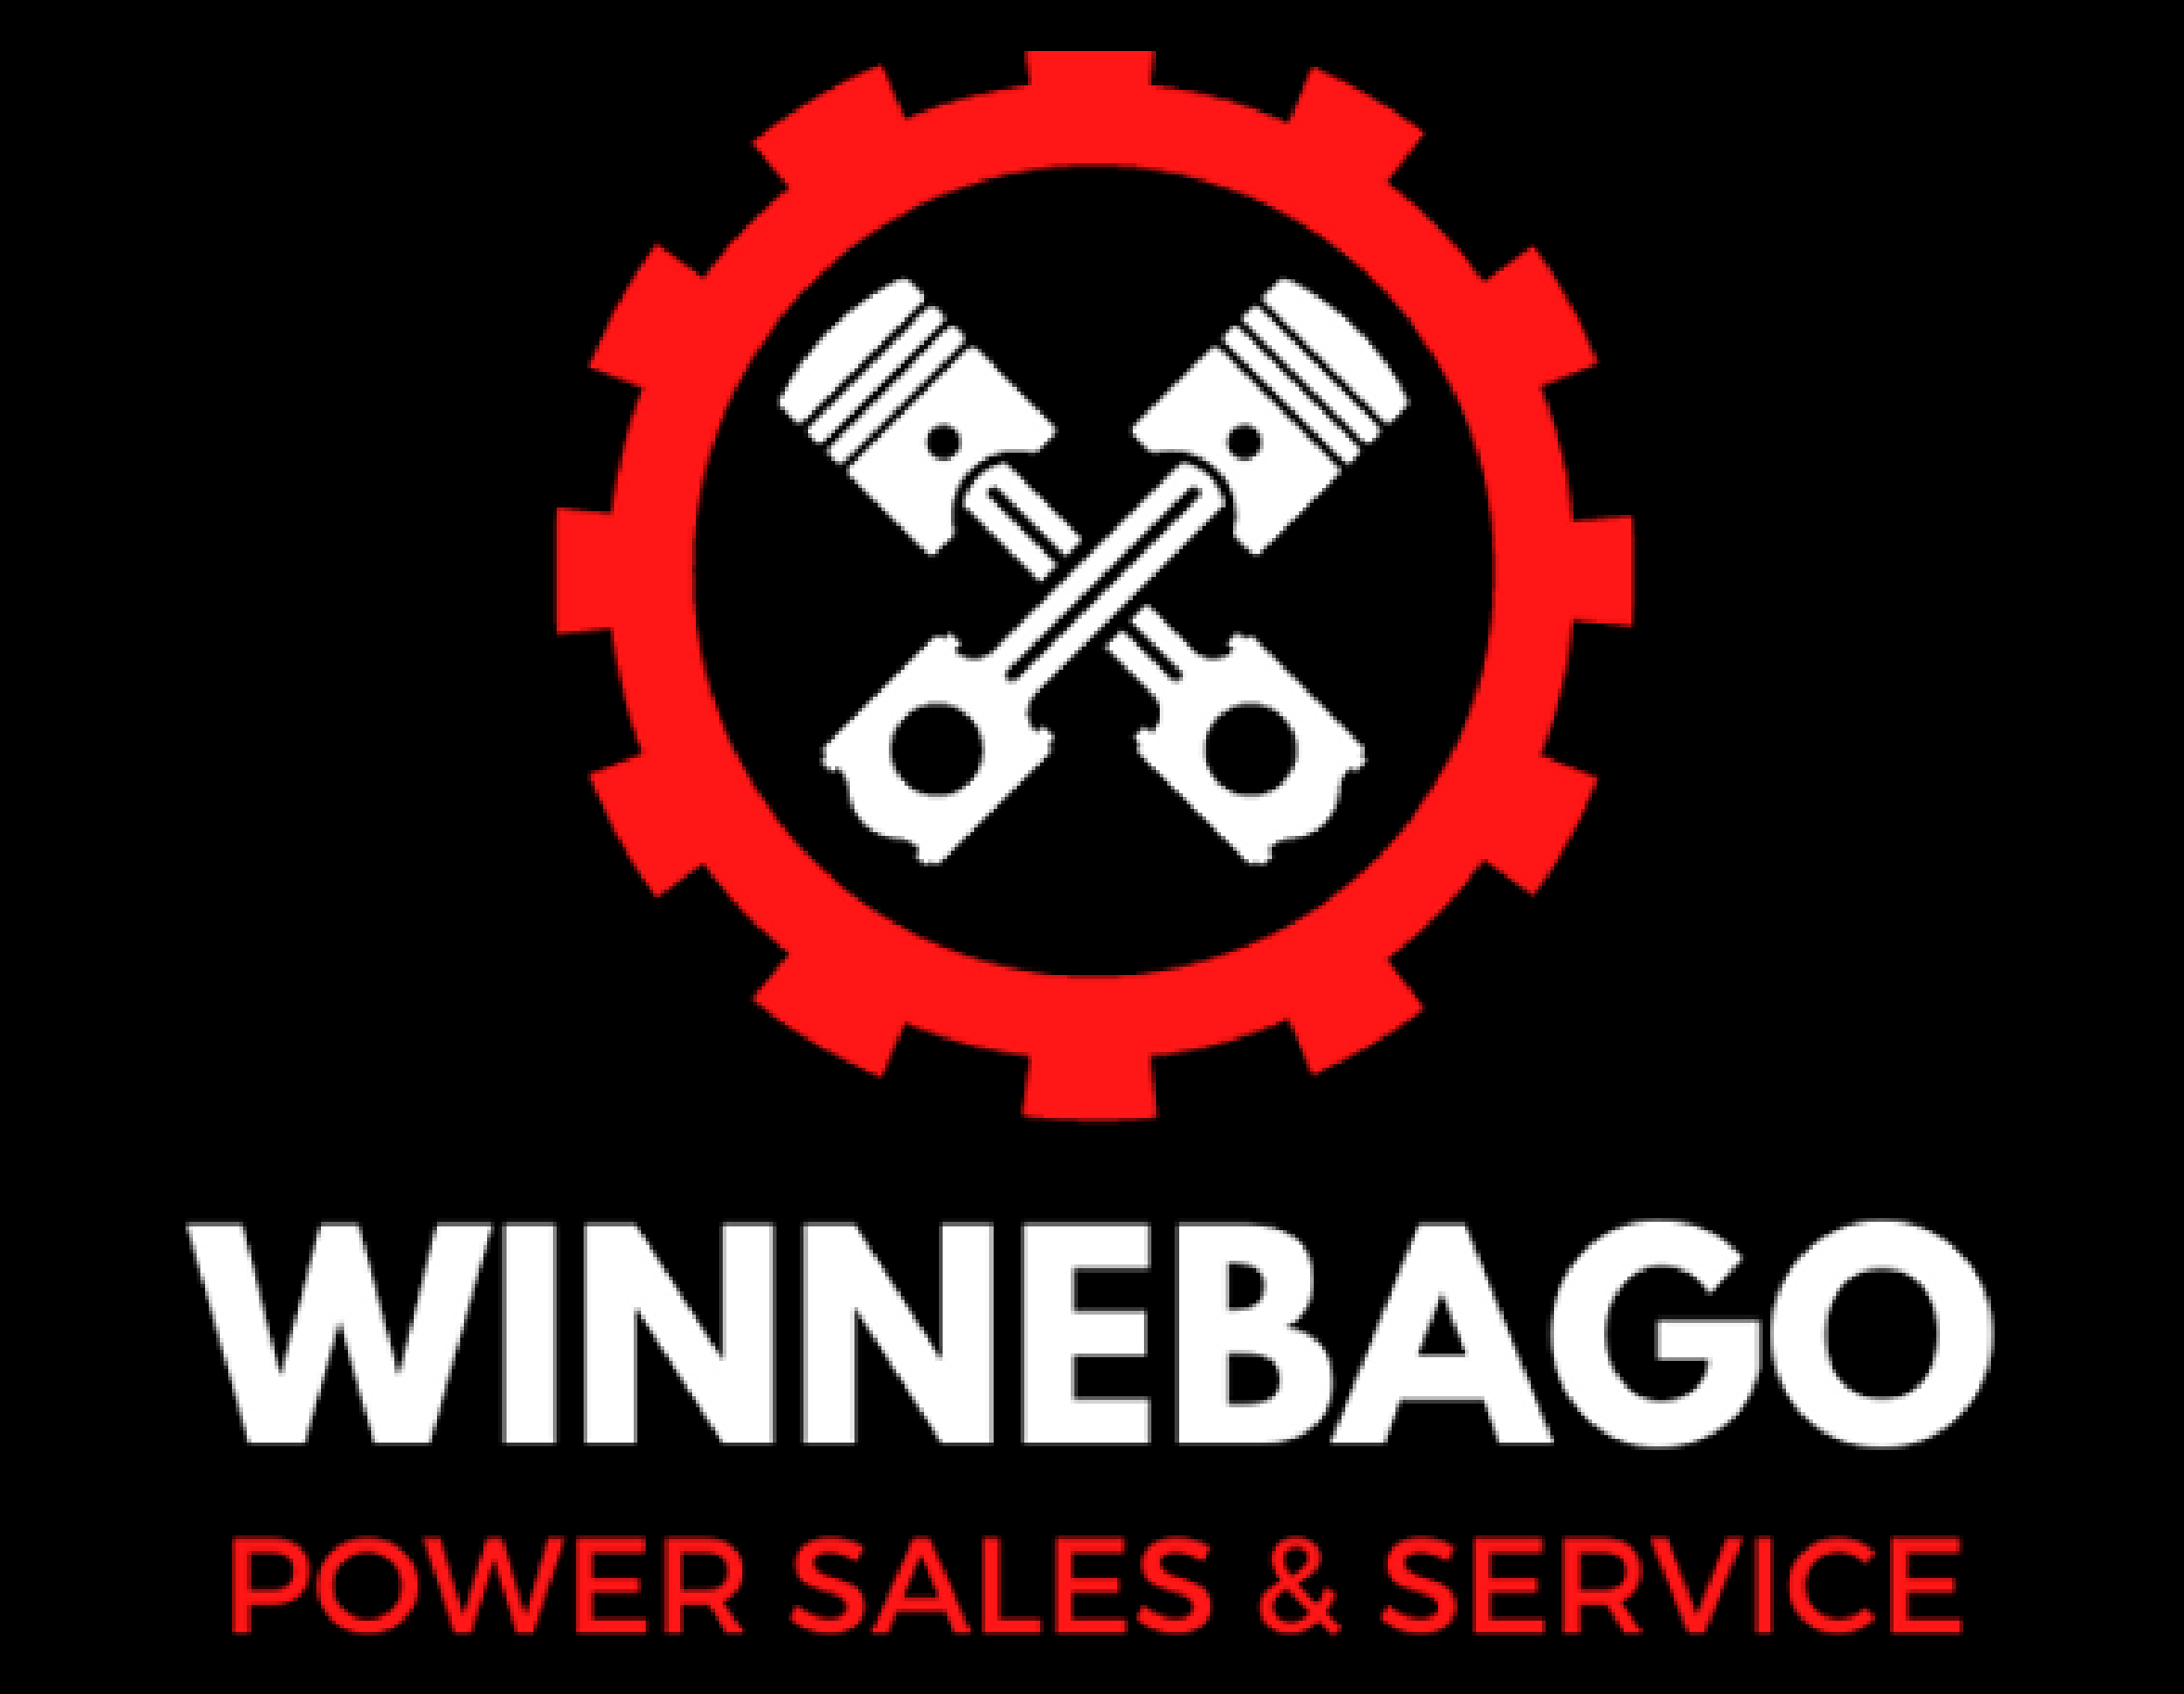 Winnebago Power Sales & Service